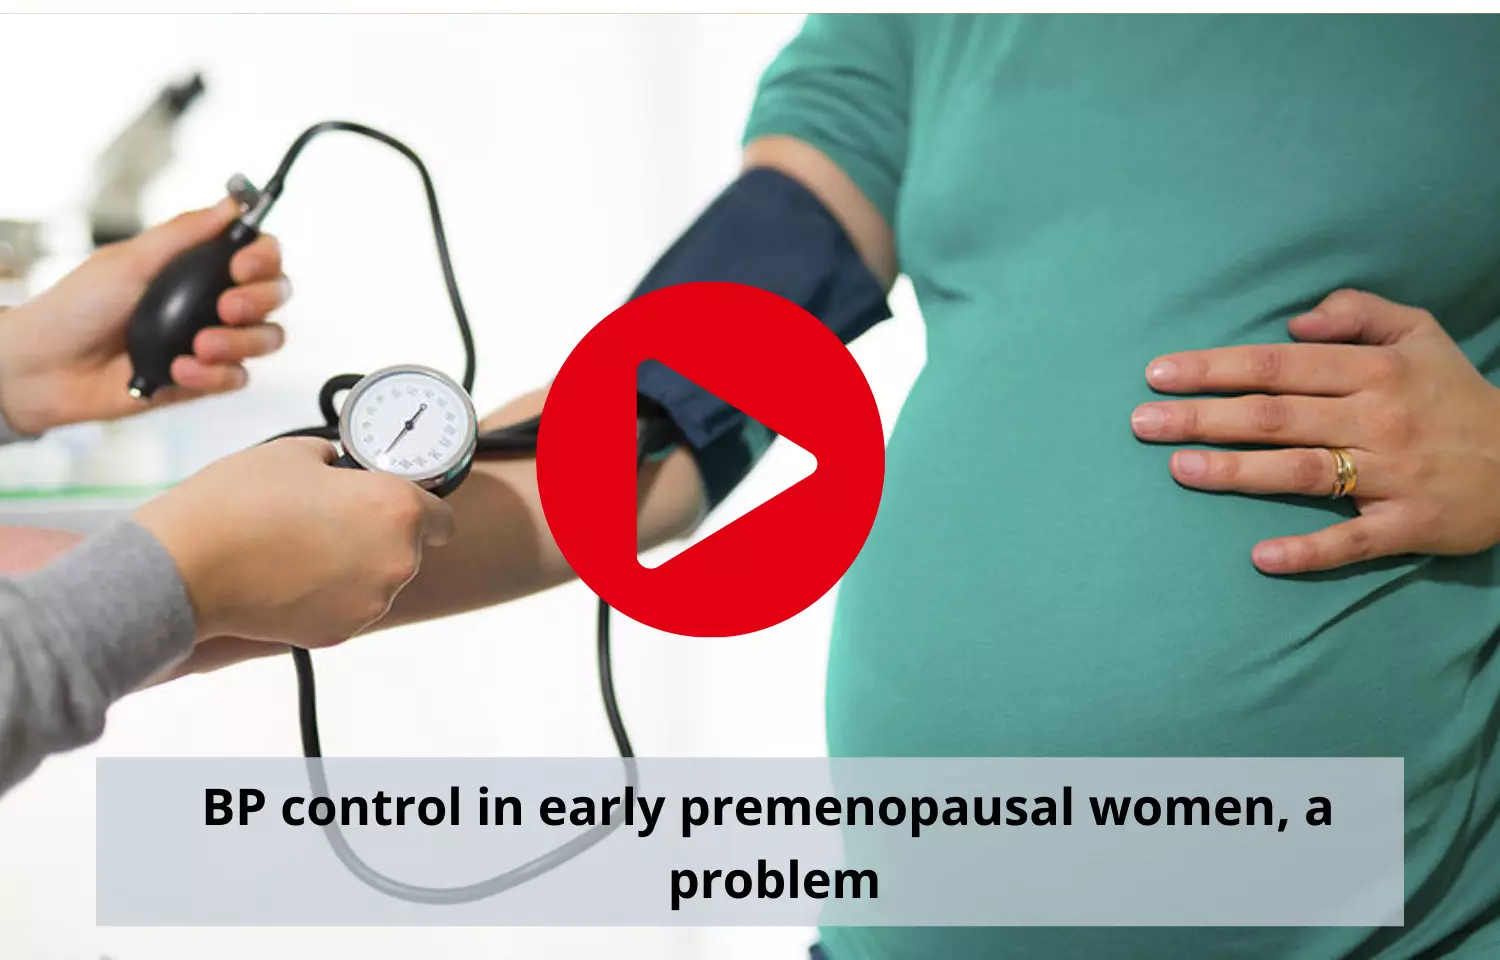 BP control in early premenopausal women, a problem